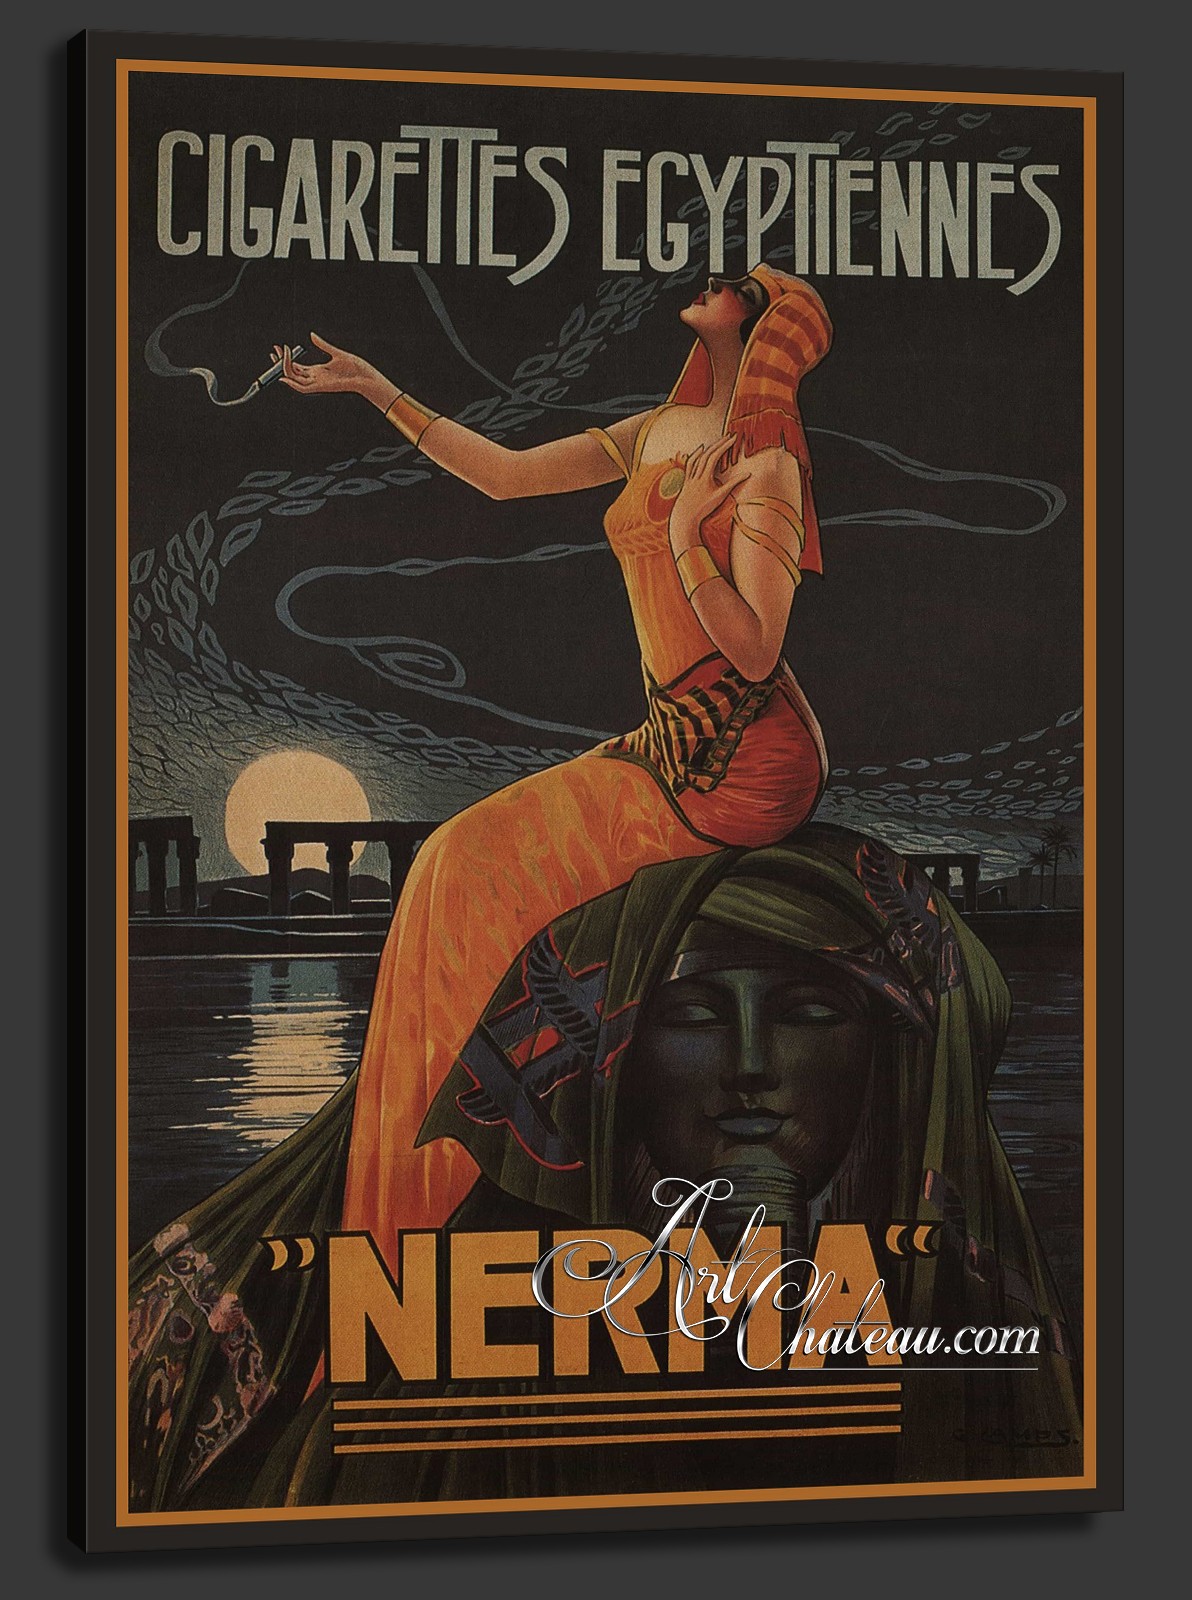 Vintage French Style Art Poster, after Gaspar Camps